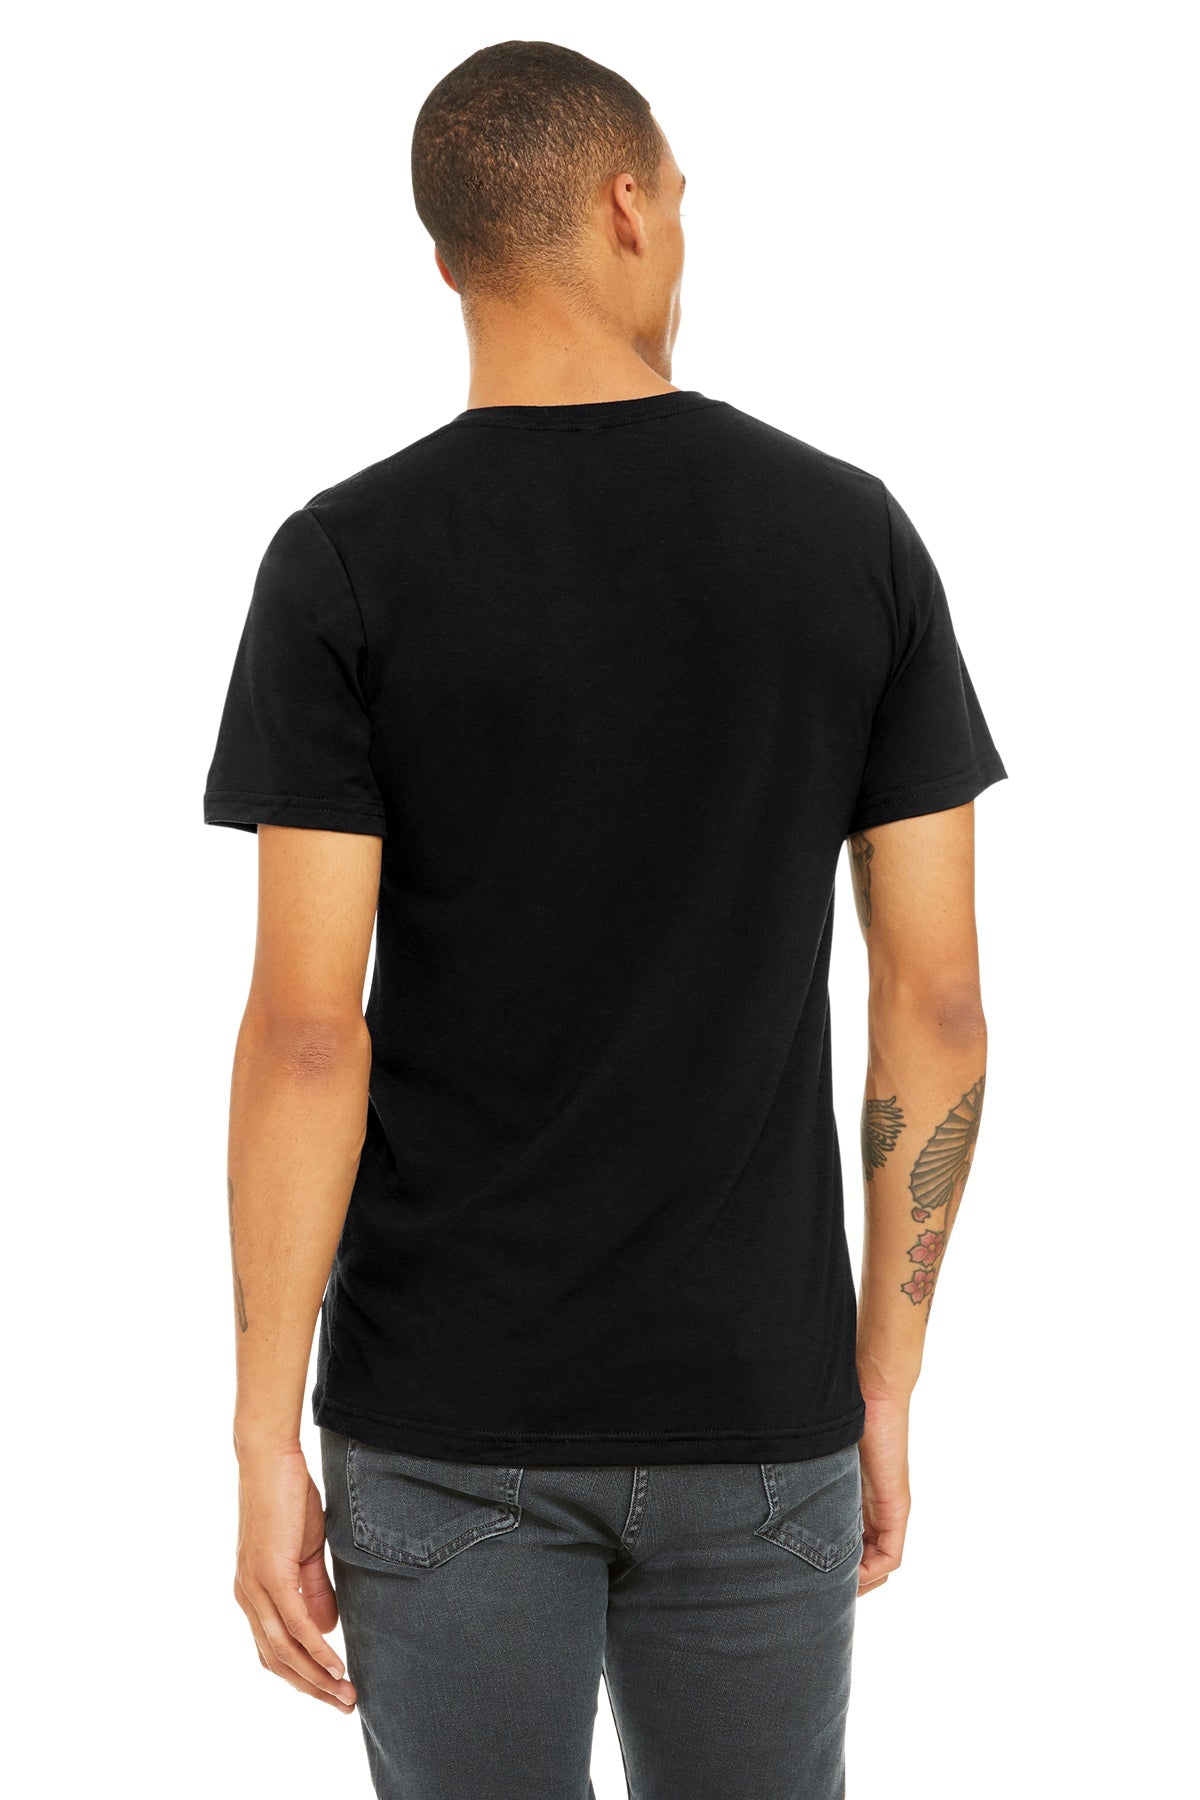 bella + canvas unisex triblend short sleeve v-neck t-shirt 3415c sld blk trblnd